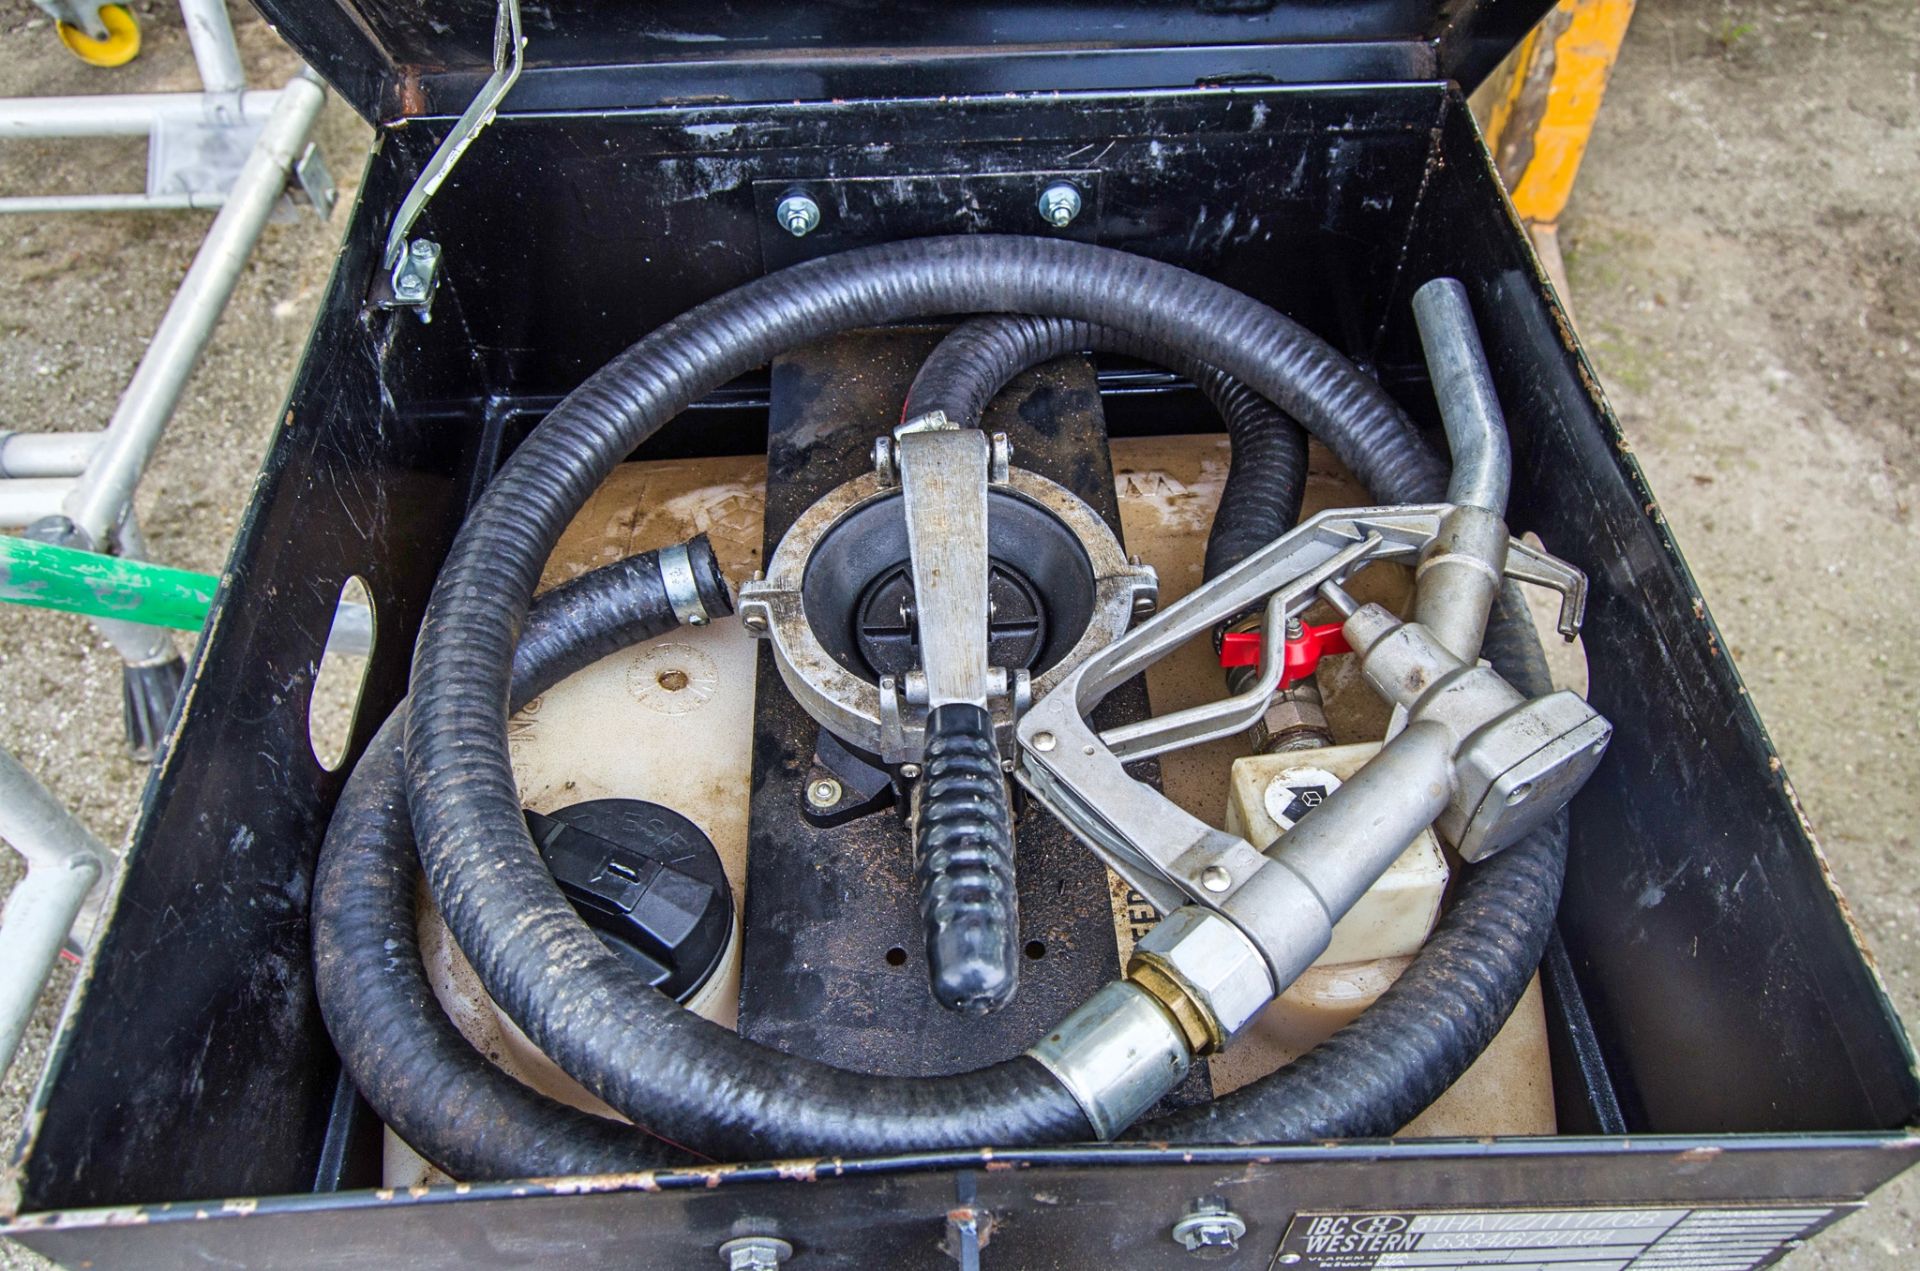 Western Easy Cube 105 litre bunded fuel bowser c/w manual pump, delivery hose and nozzle A845845 - Bild 2 aus 2